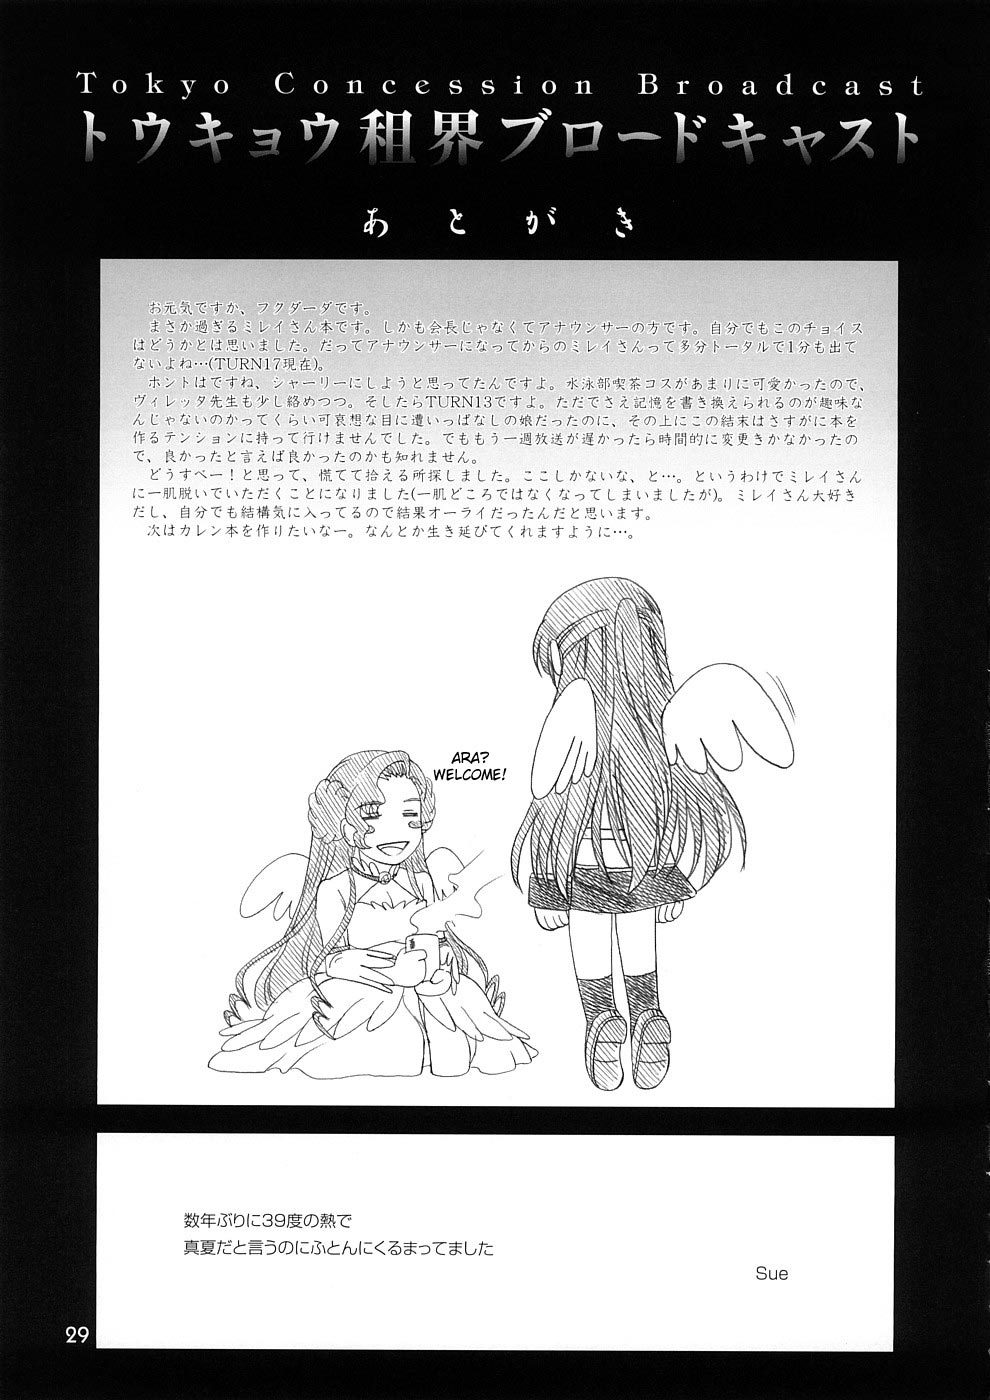 Tokyo Concession Broadcast code geass 27 hentai manga